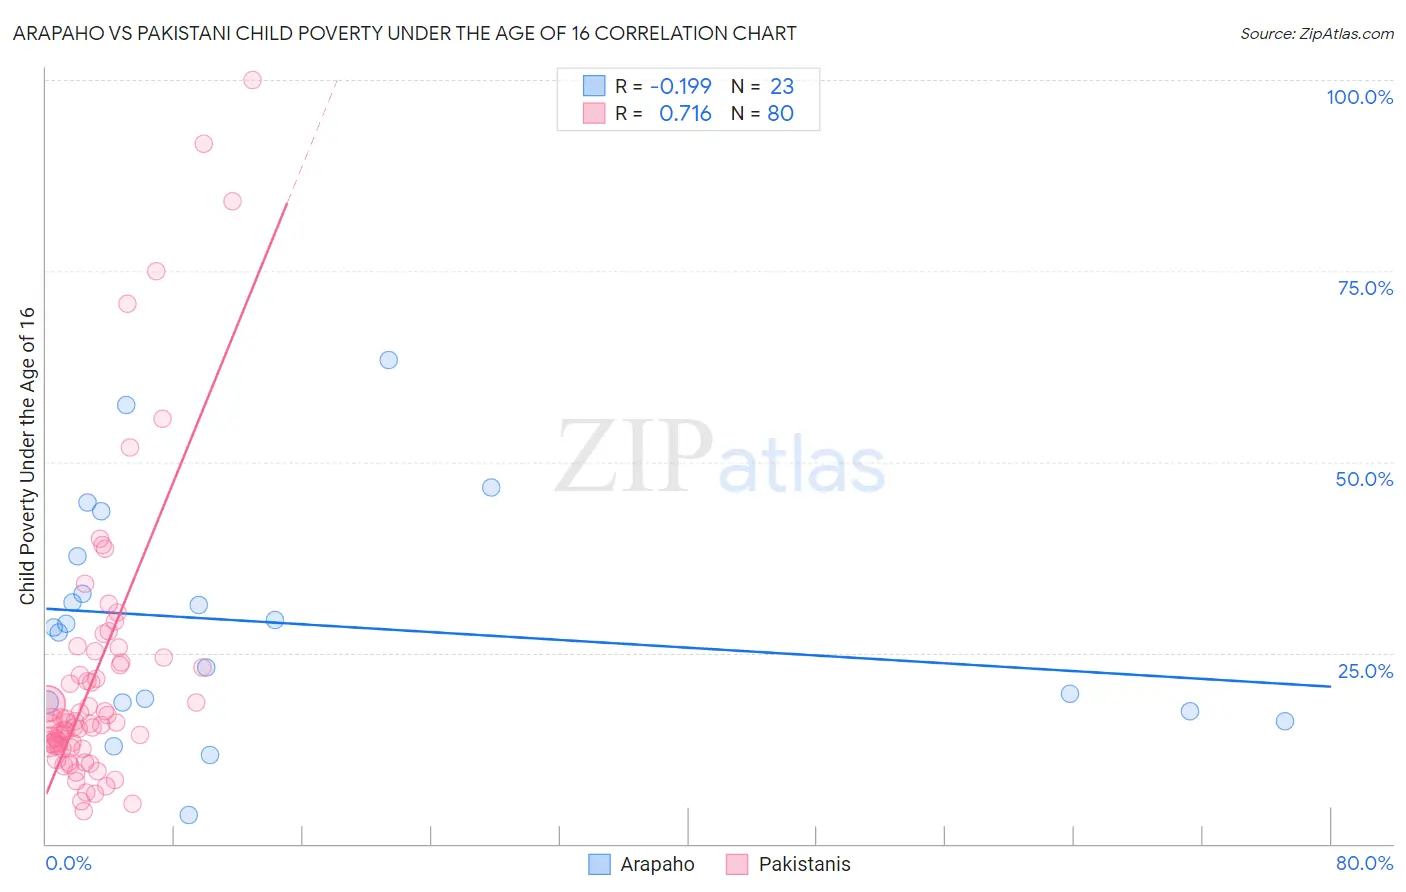 Arapaho vs Pakistani Child Poverty Under the Age of 16